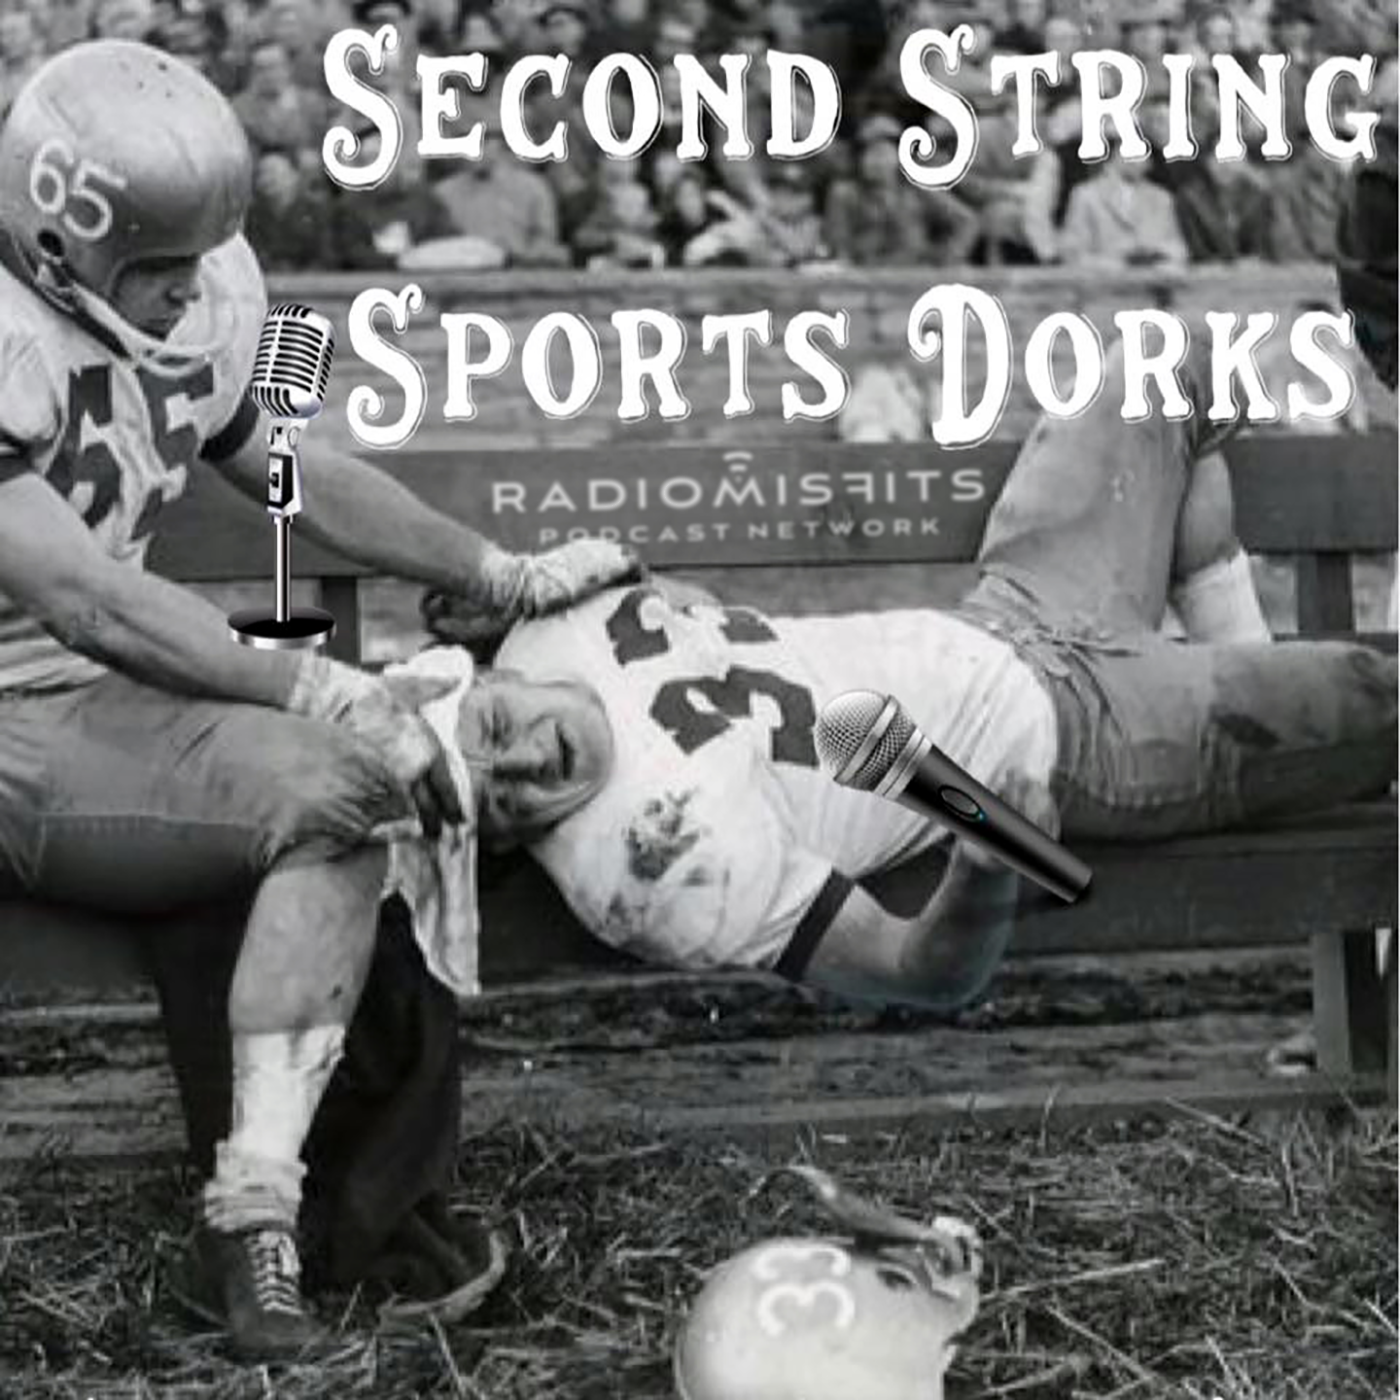 Second String Sports Dorks on Radio Misfits